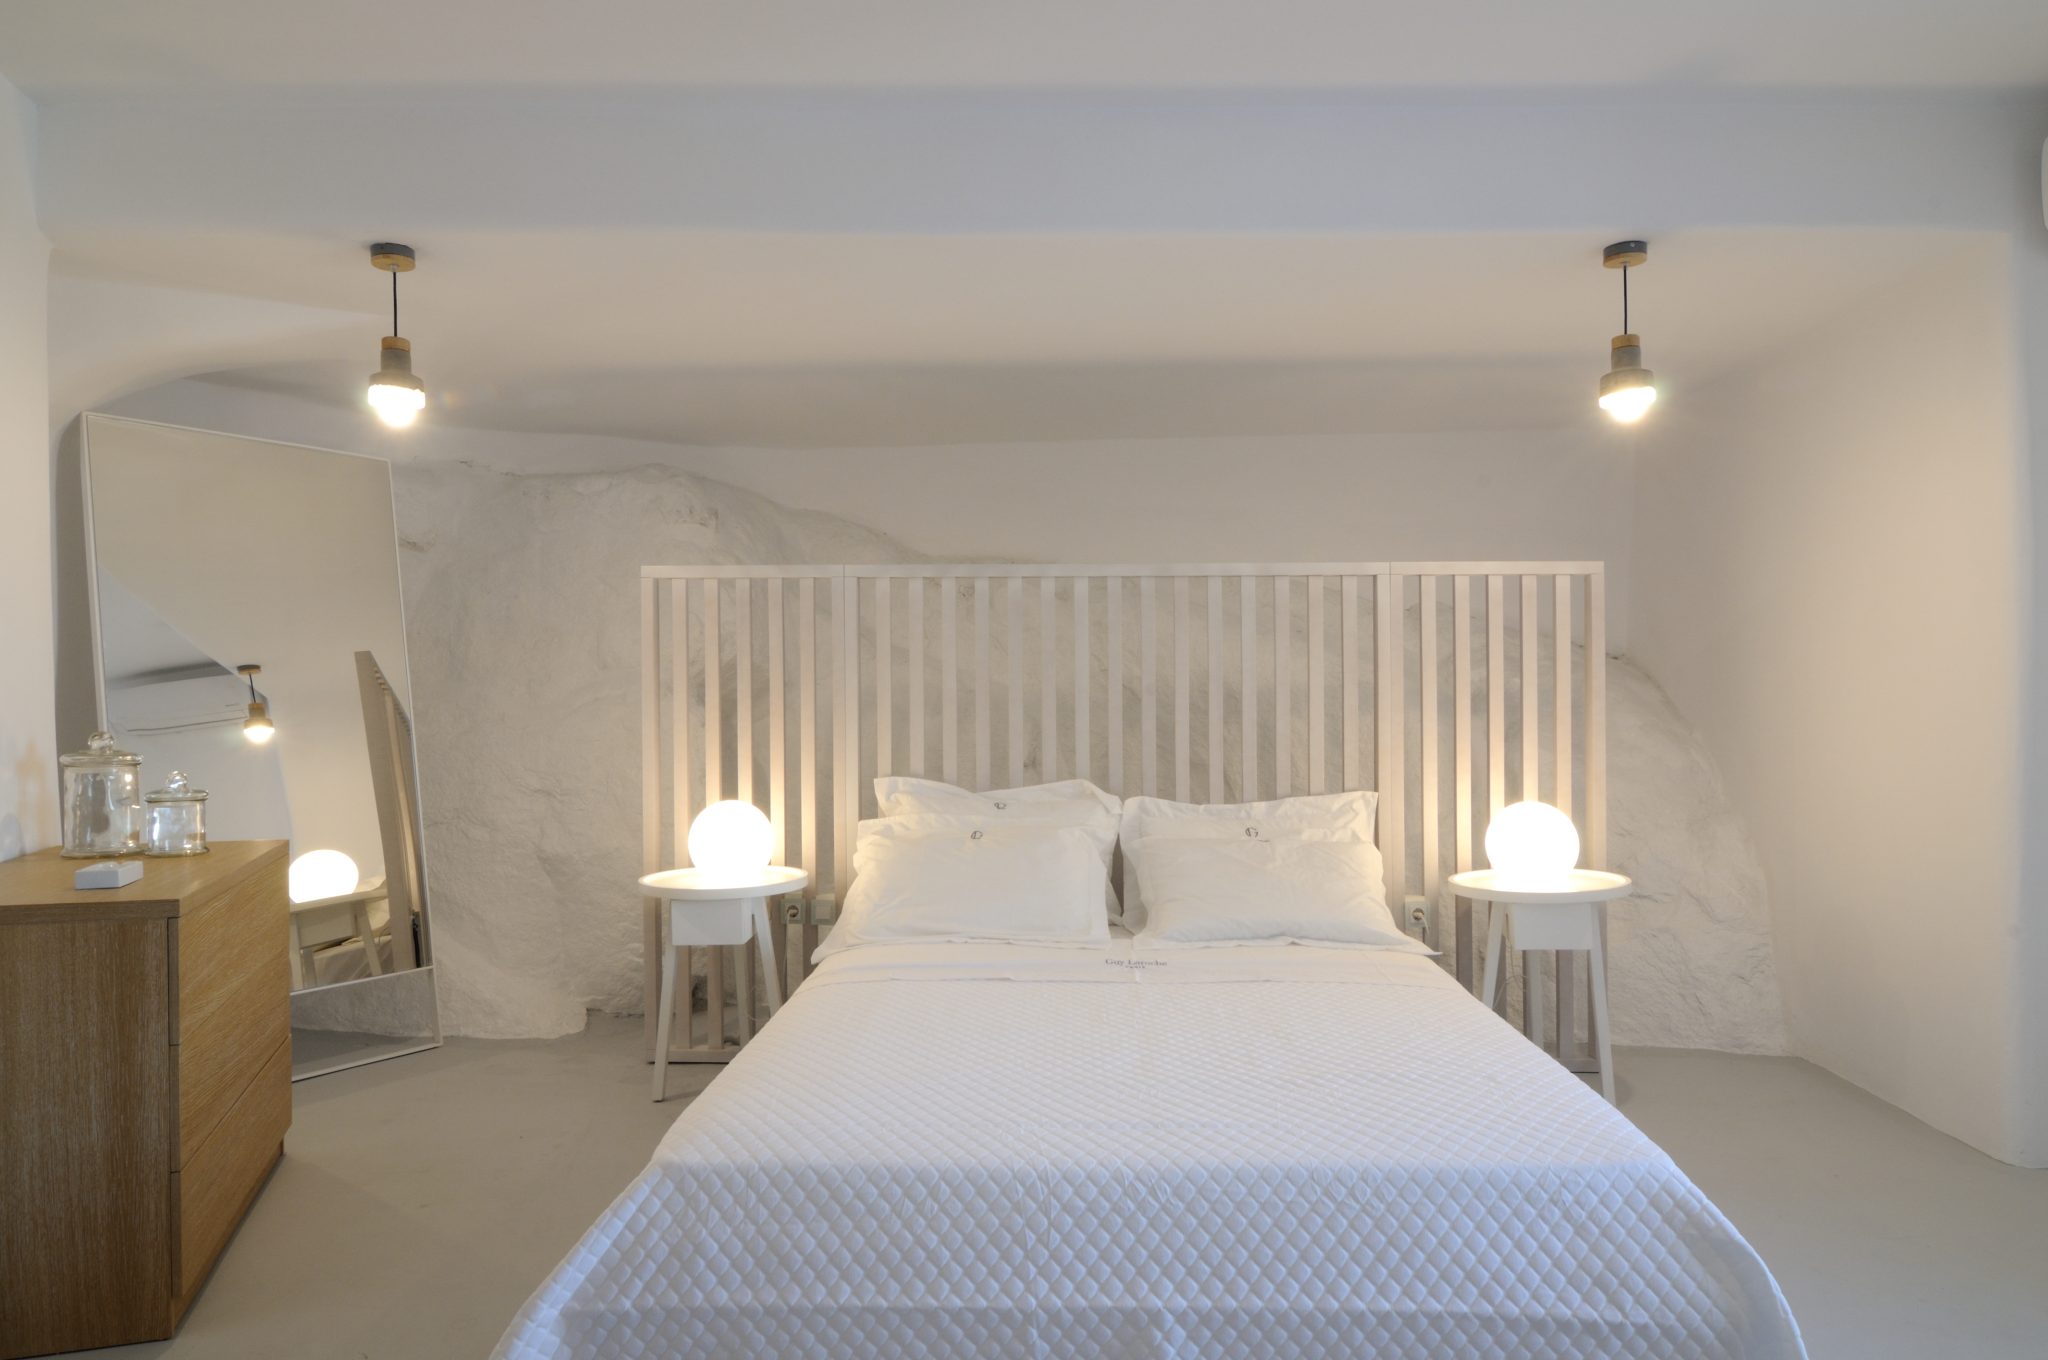 Villa Neo in Aleomandra-mykonos available for rent by Presidence